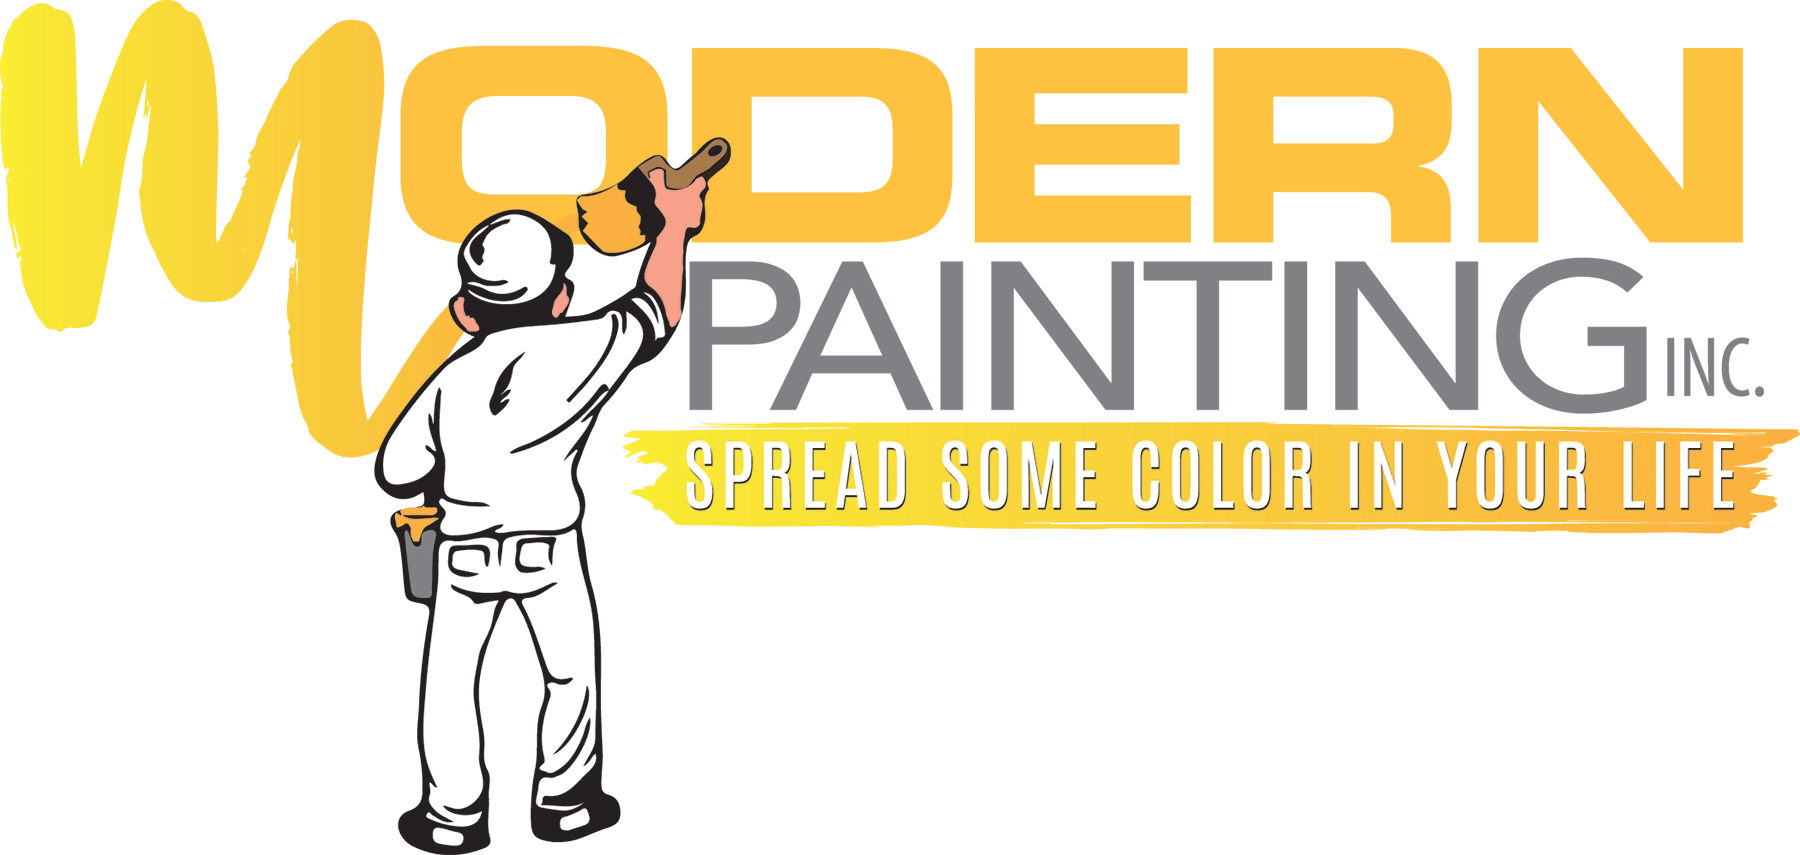 Modern Painting, Inc. Logo